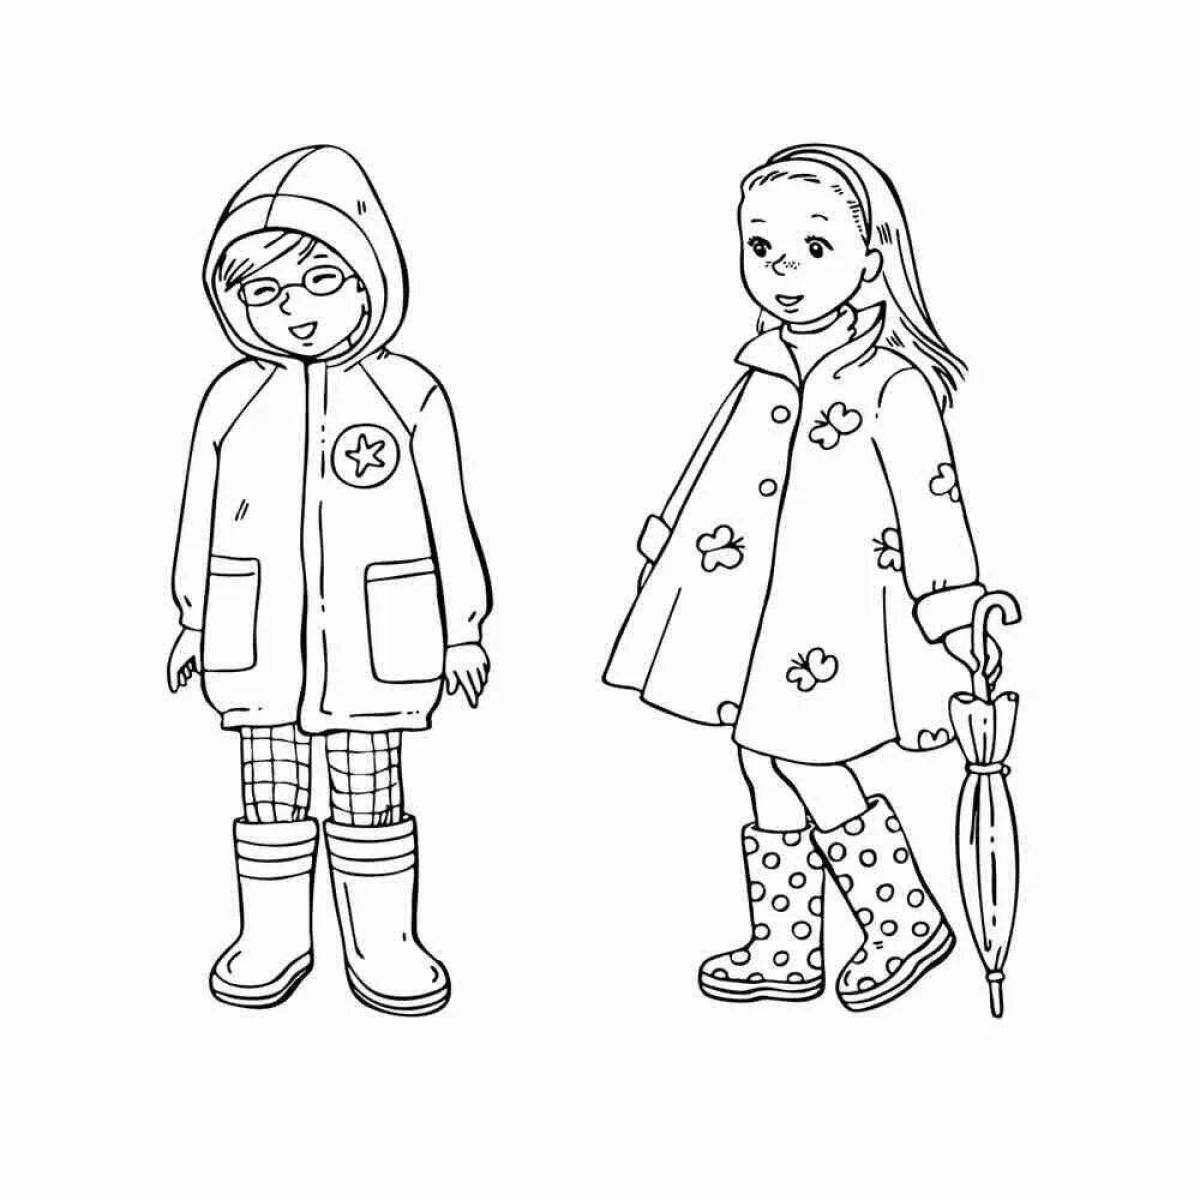 Bright child in winter clothes